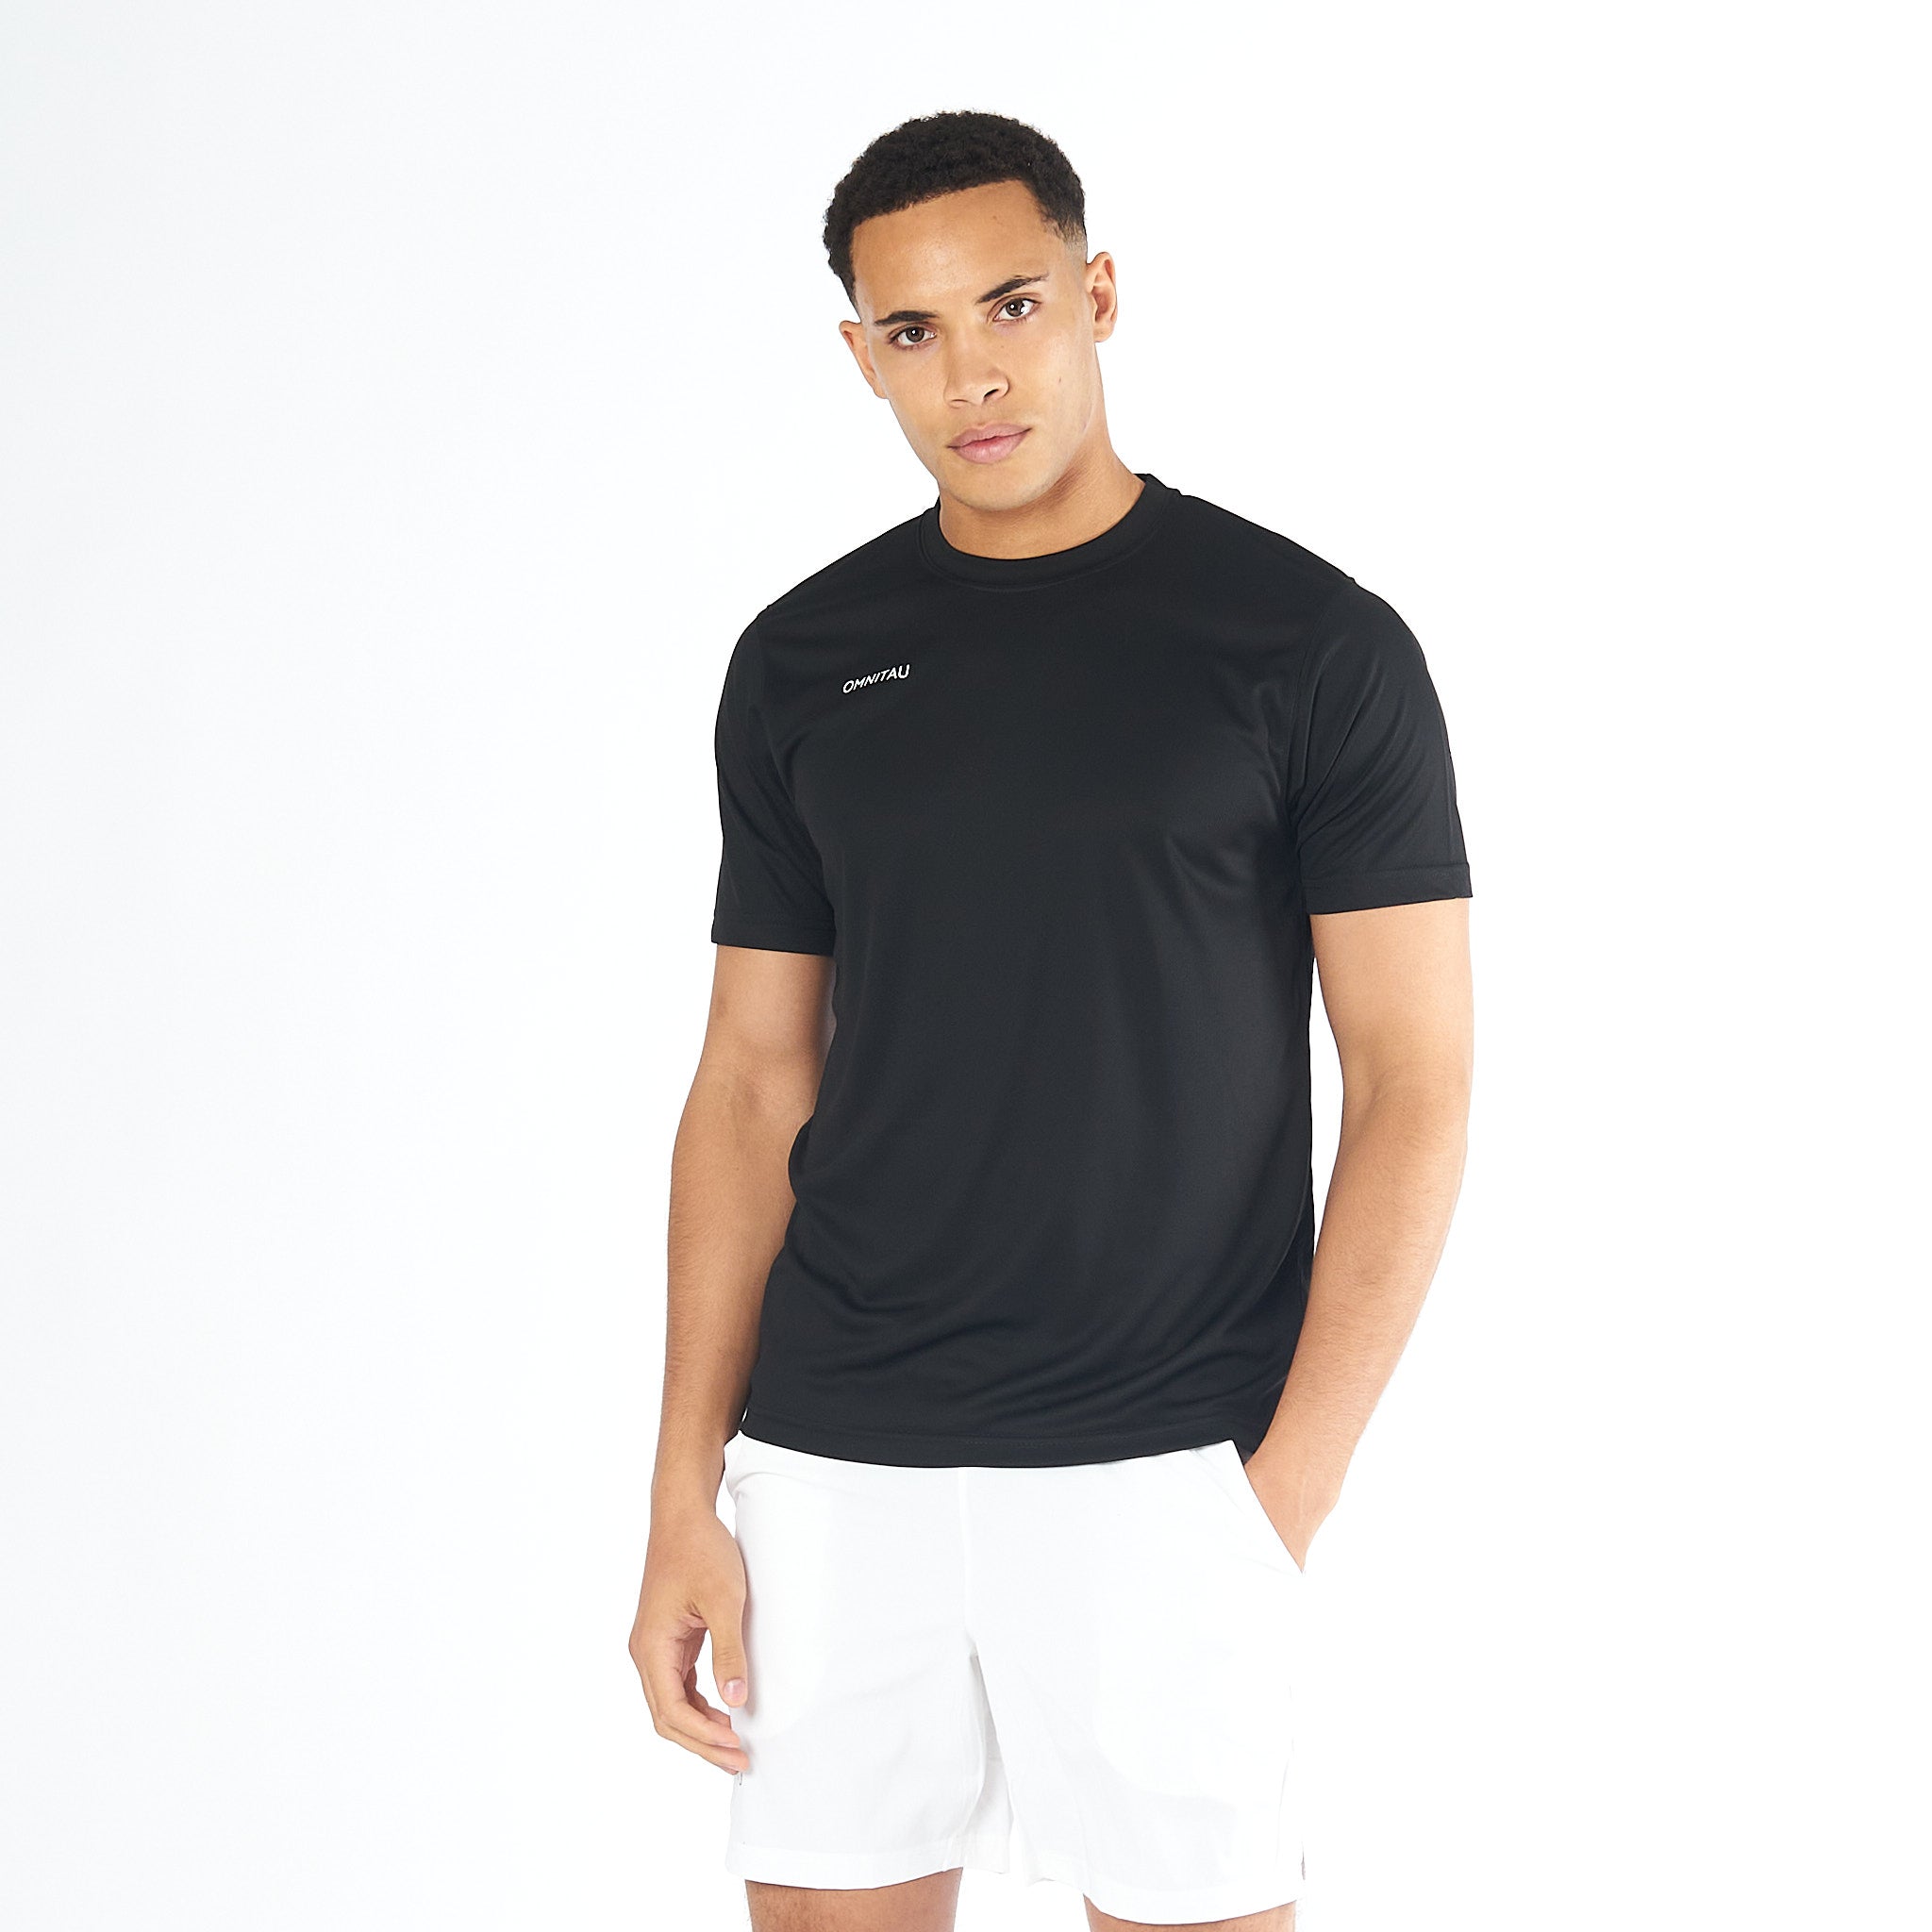 Omnitau Men's Team Sports Core Football Shirt - Black